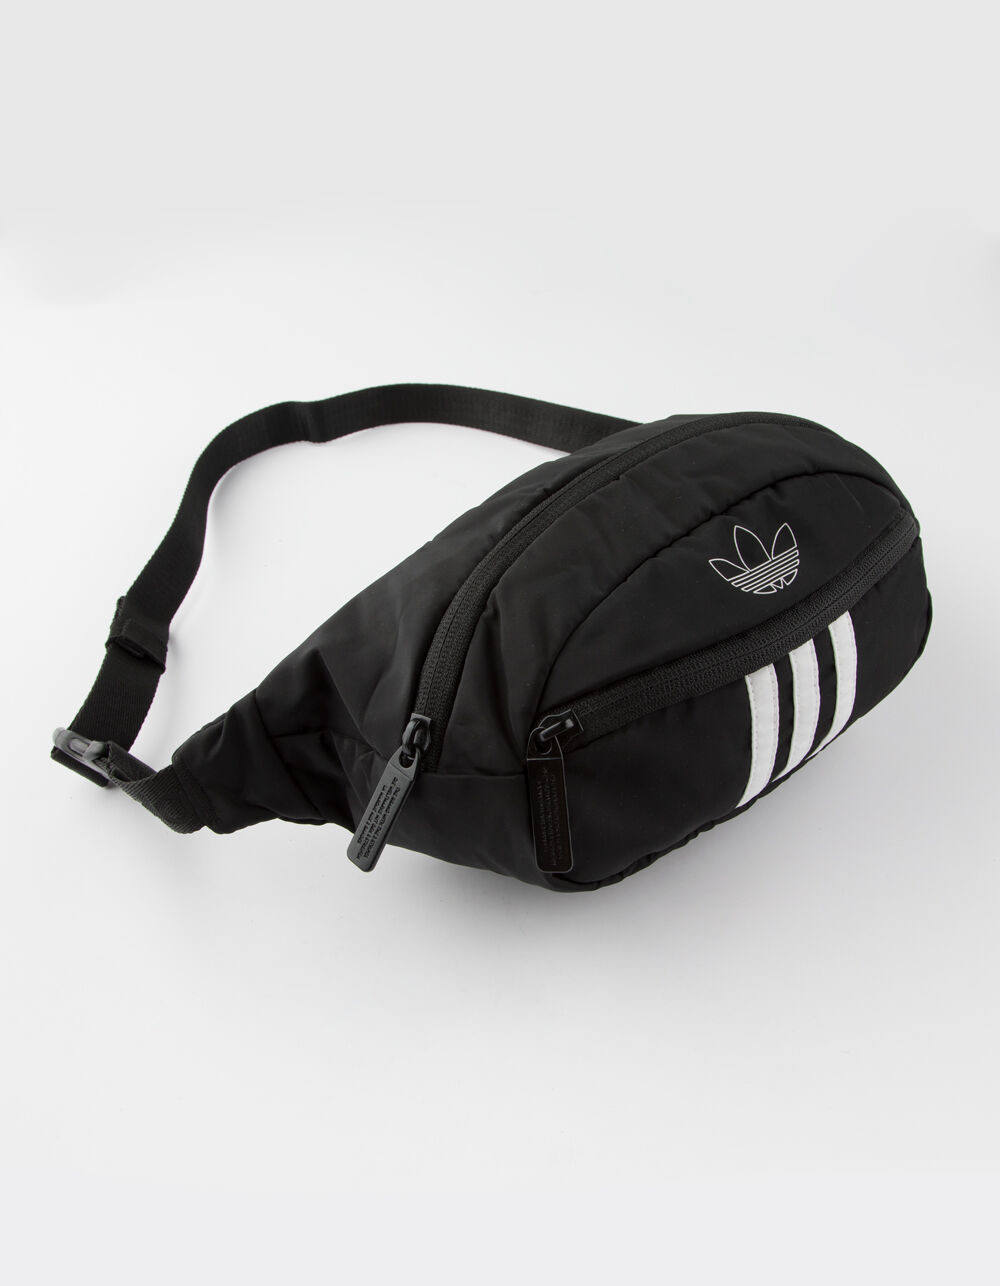 Adidas Originals National Waist Bag Fanny Pack Black/White Men's  Women's Travel